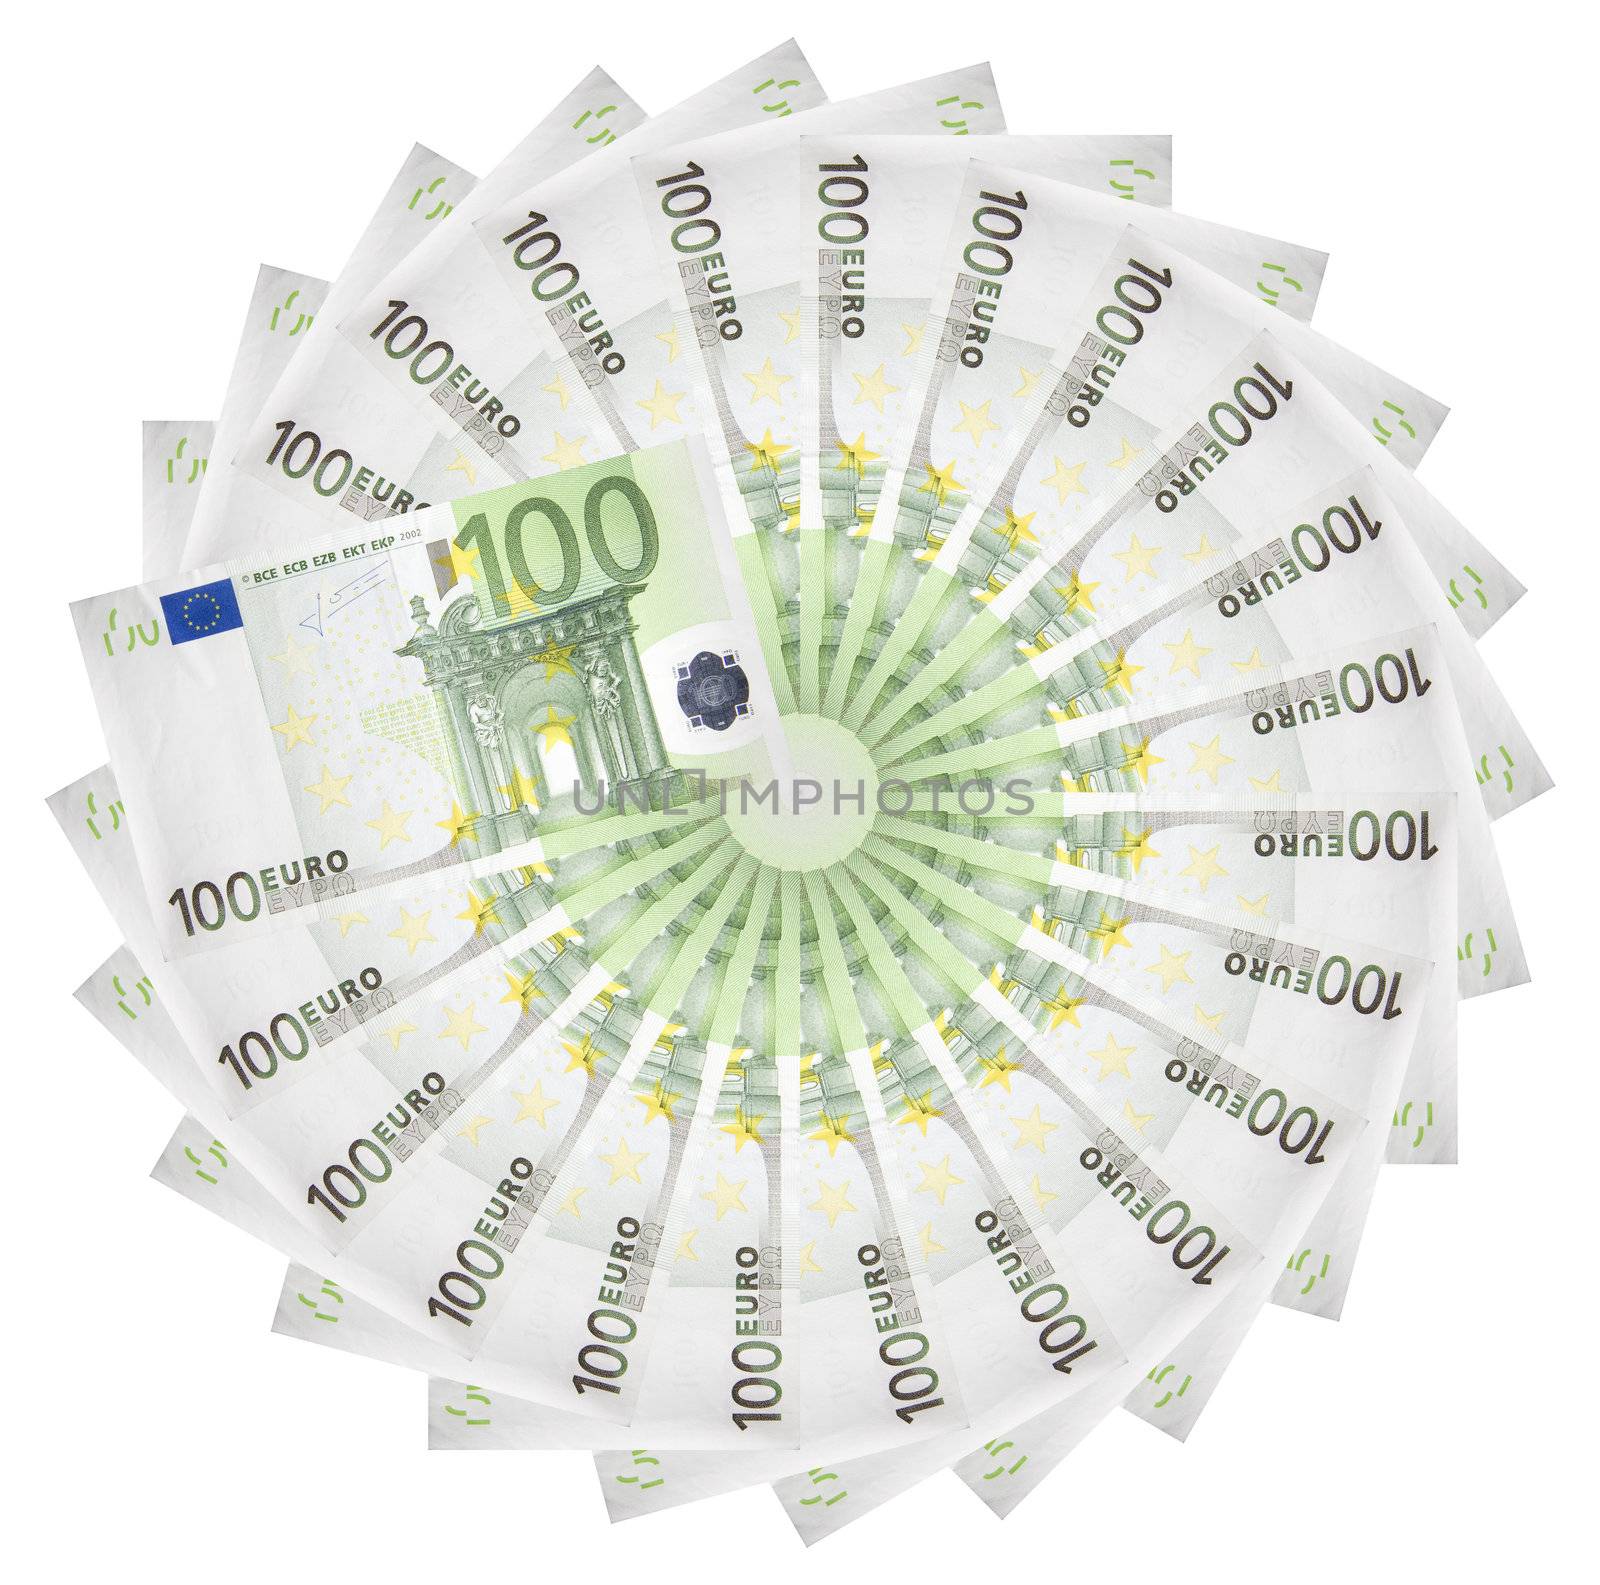 Euro banknotes. by domencolja